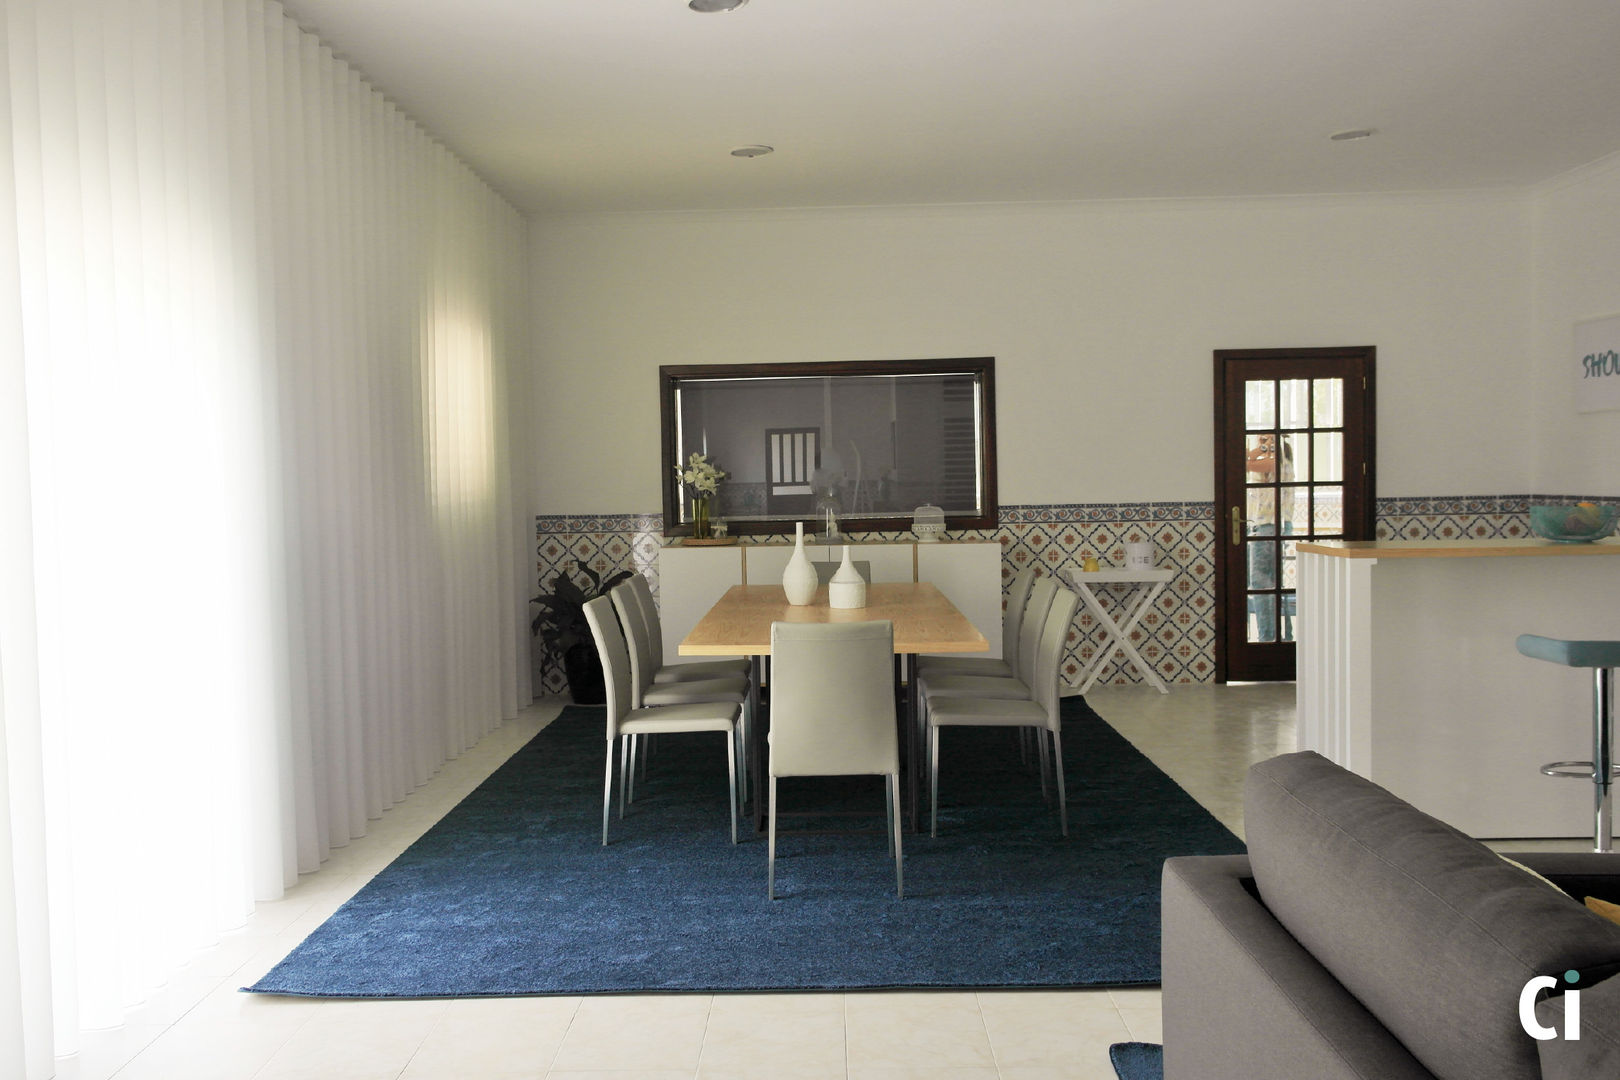 Sala de convívio familiar, 2015 - Braga, Ci interior decor Ci interior decor Country style dining room